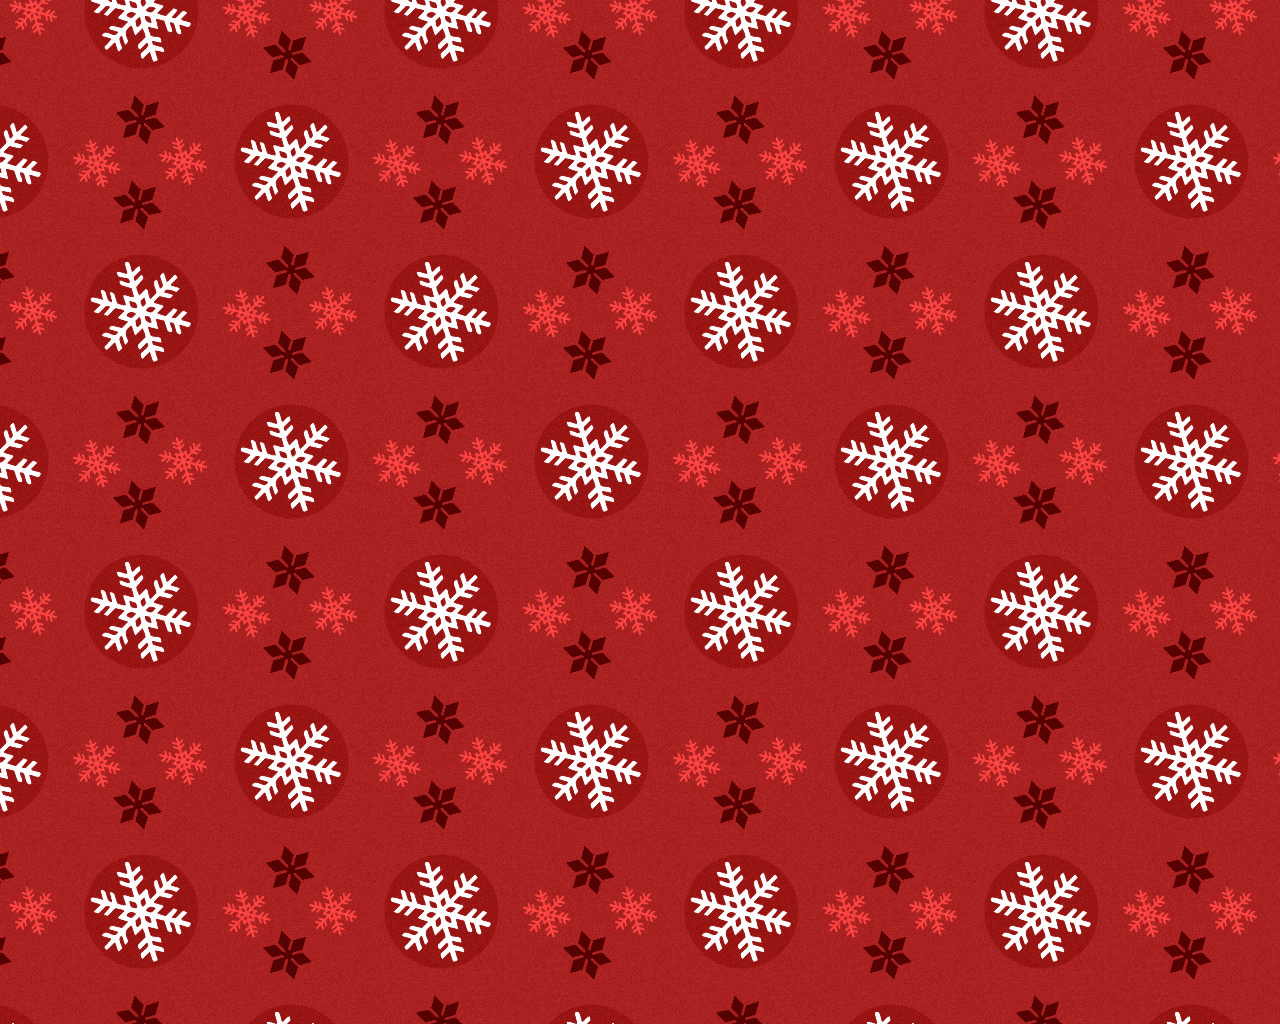 44+] Christmas Wallpaper Patterns - WallpaperSafari